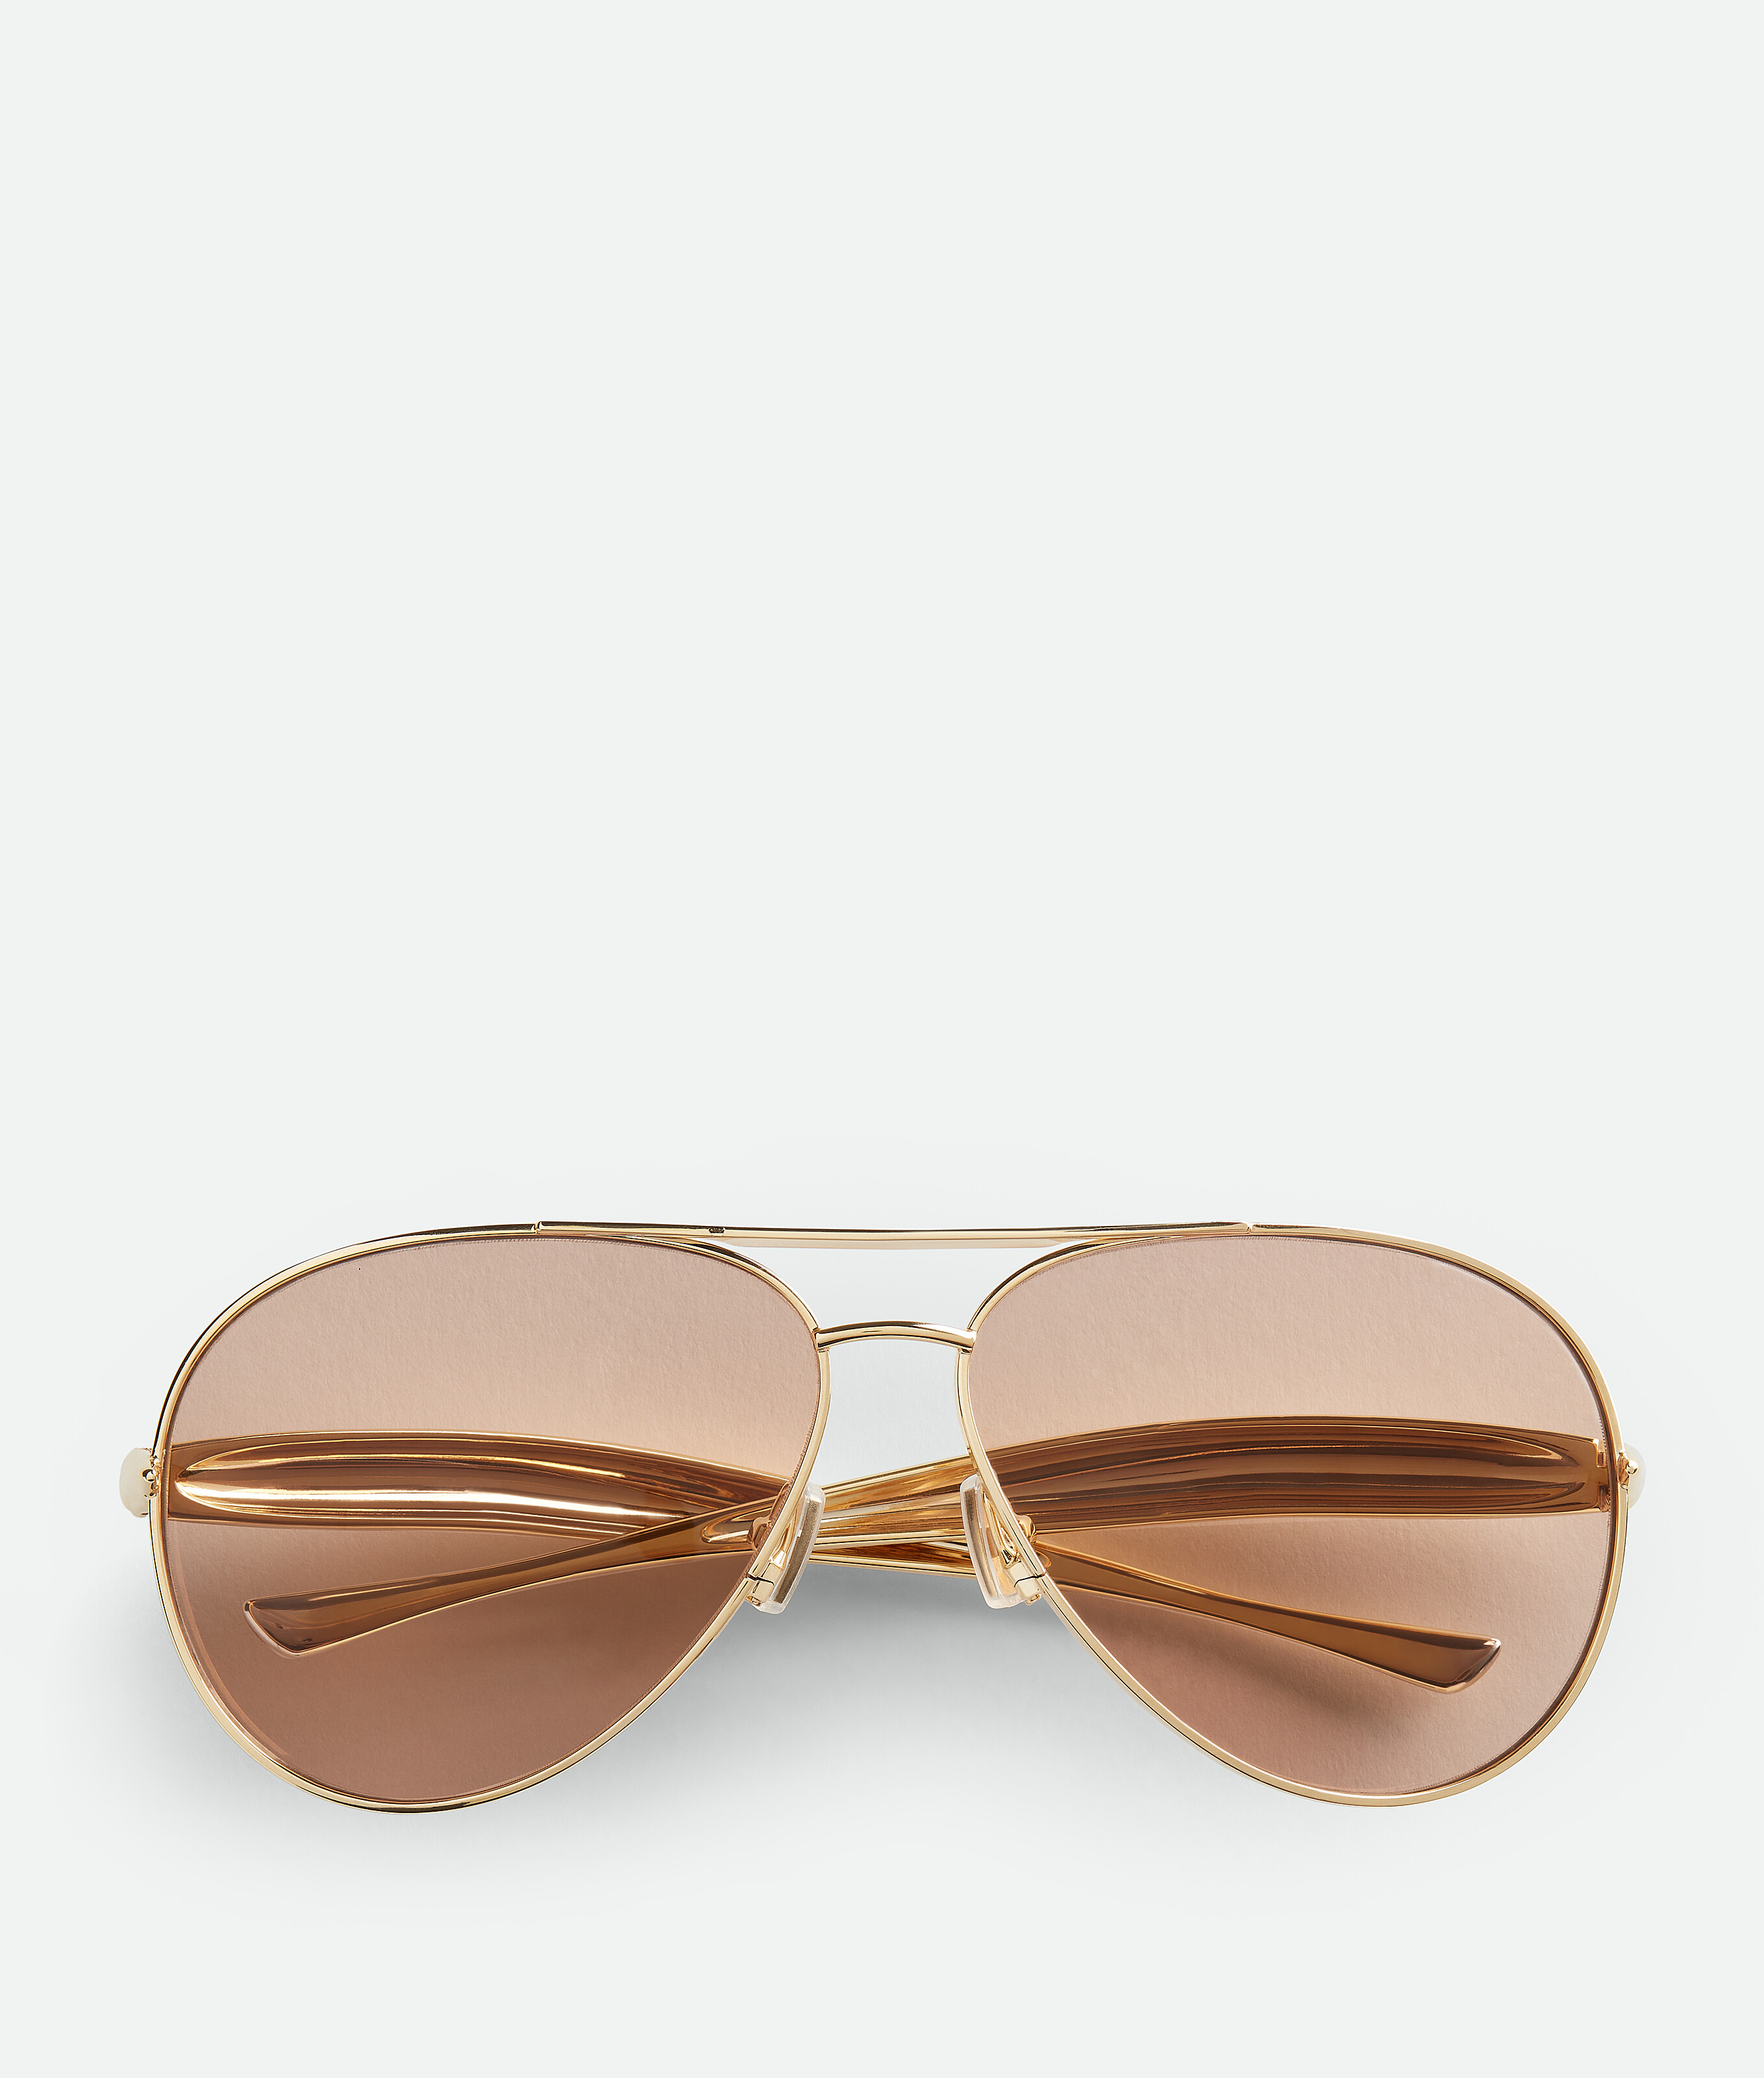 Bottega Veneta® Sardine Aviator Sunglasses in Gold/brown. Shop